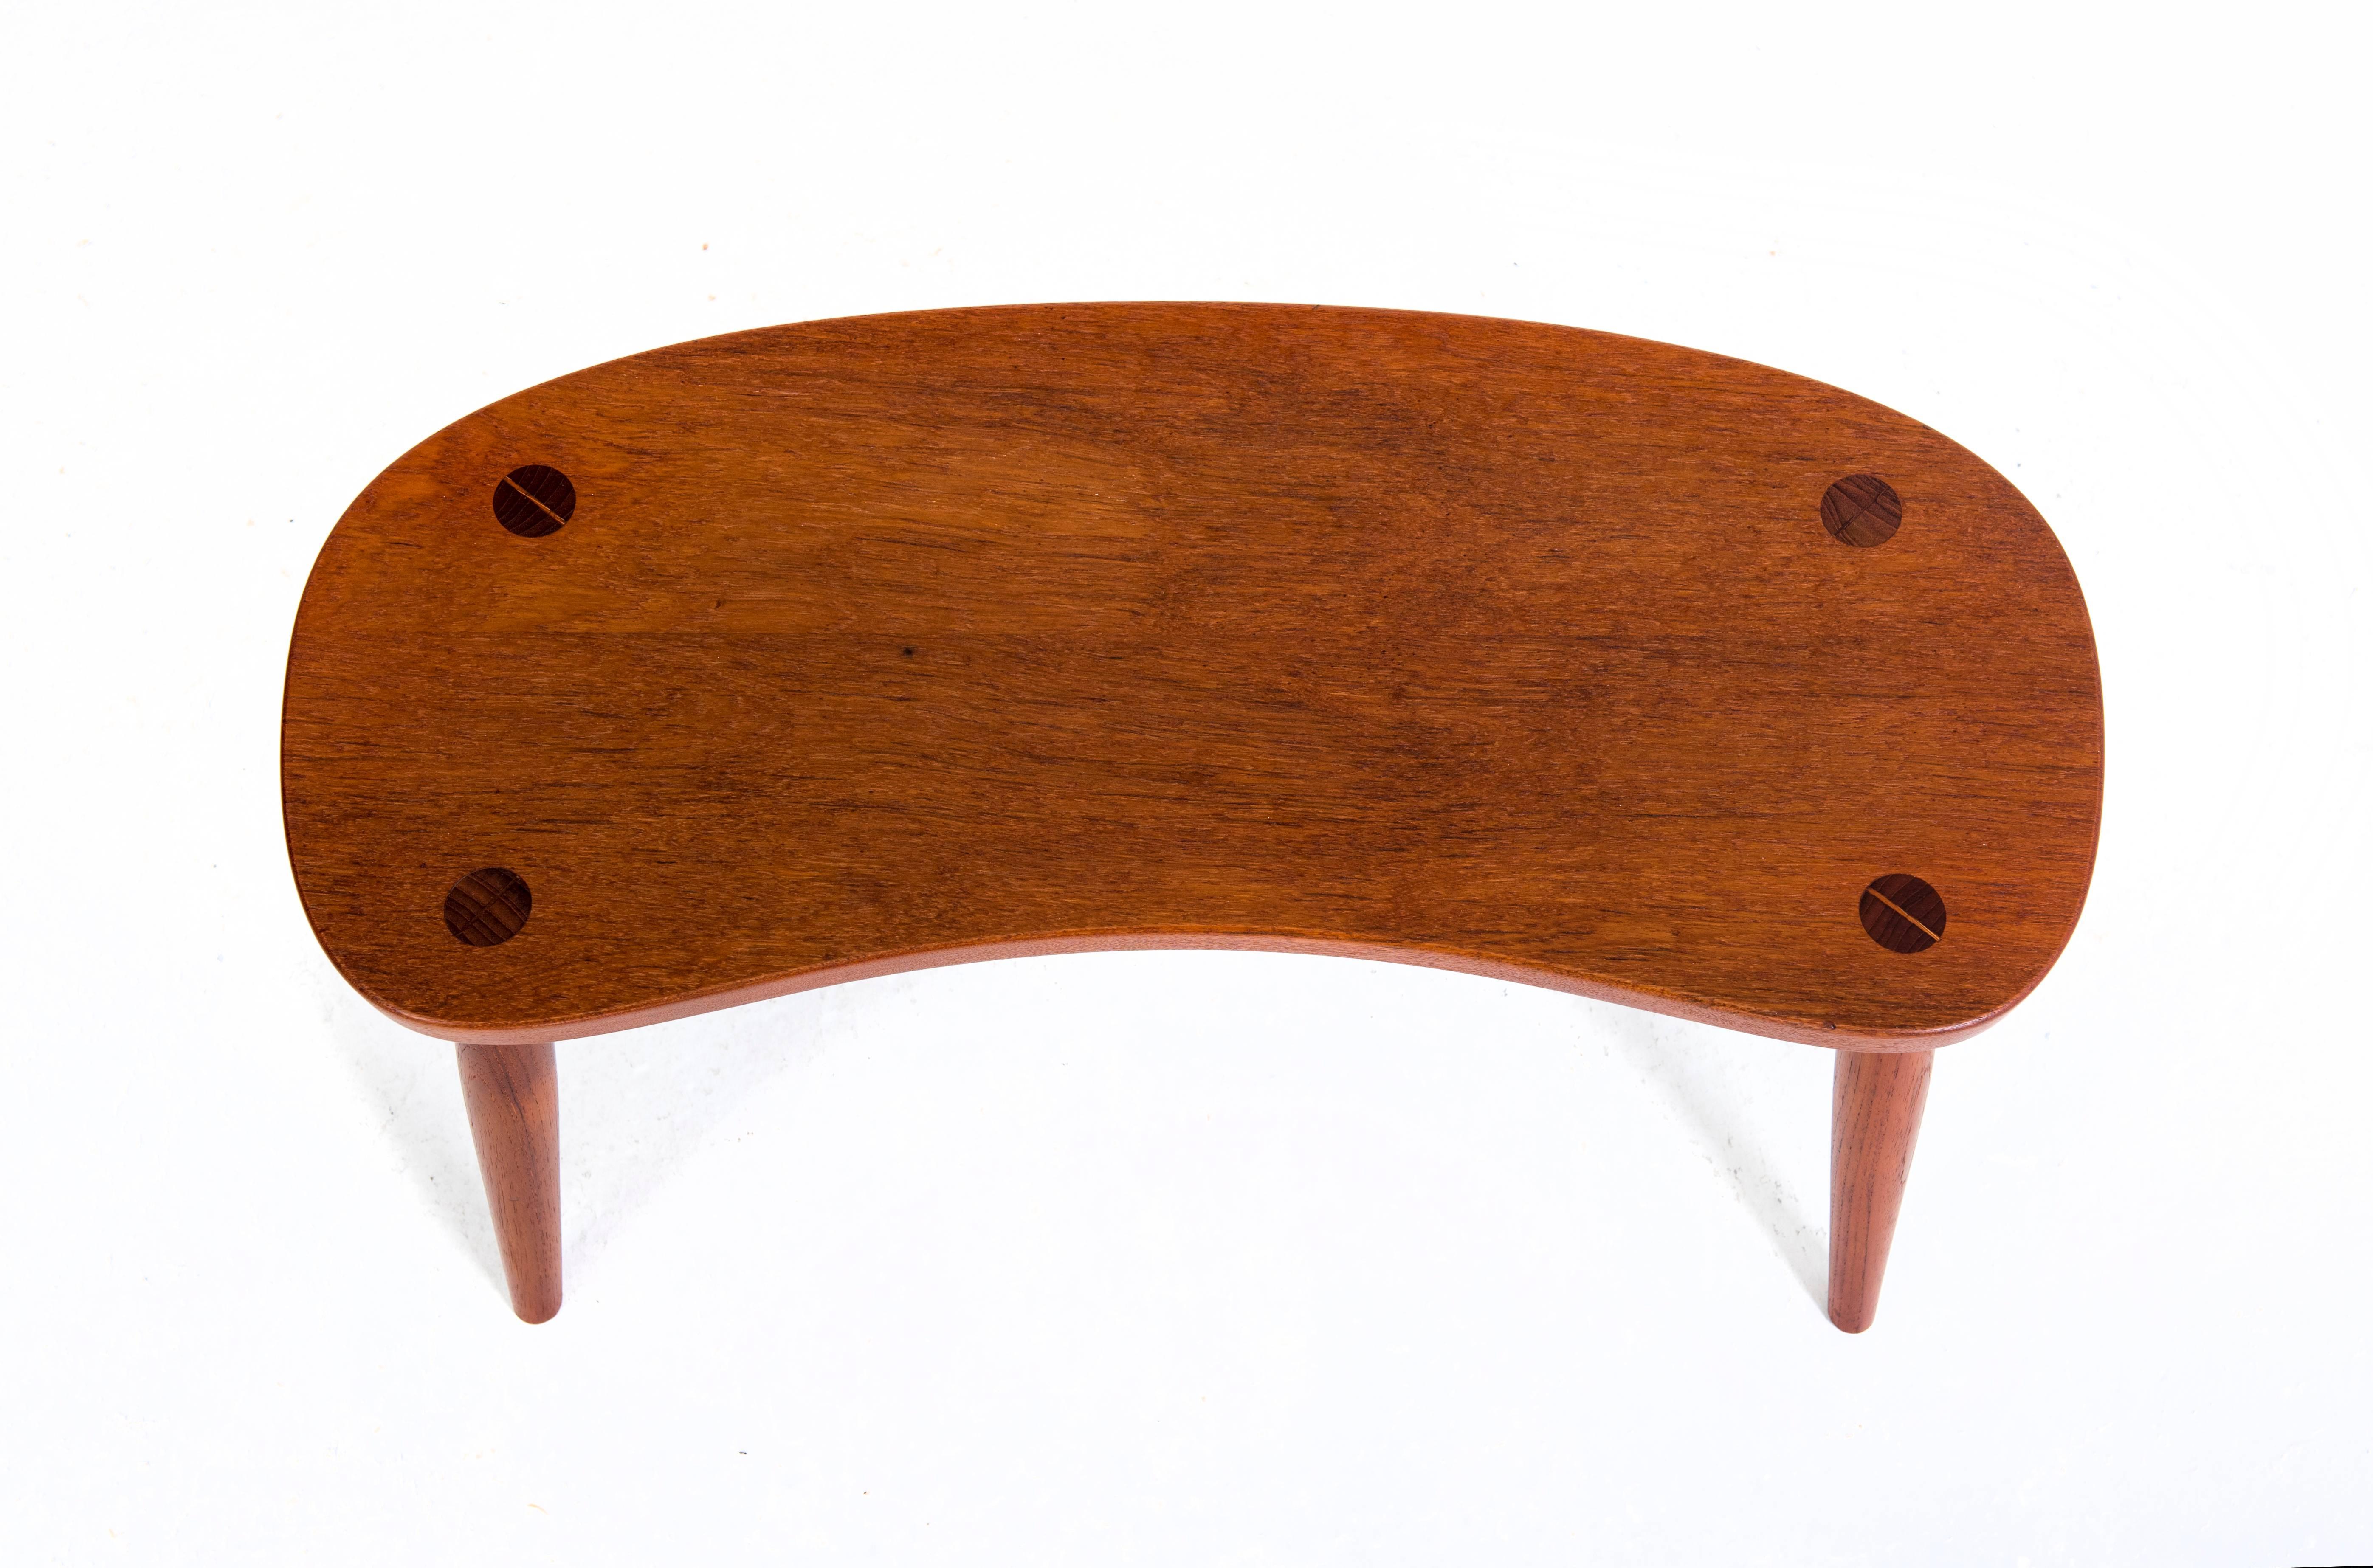 Josef Frank.

Solid teak stool.

Made by Svenskt Tenn.

